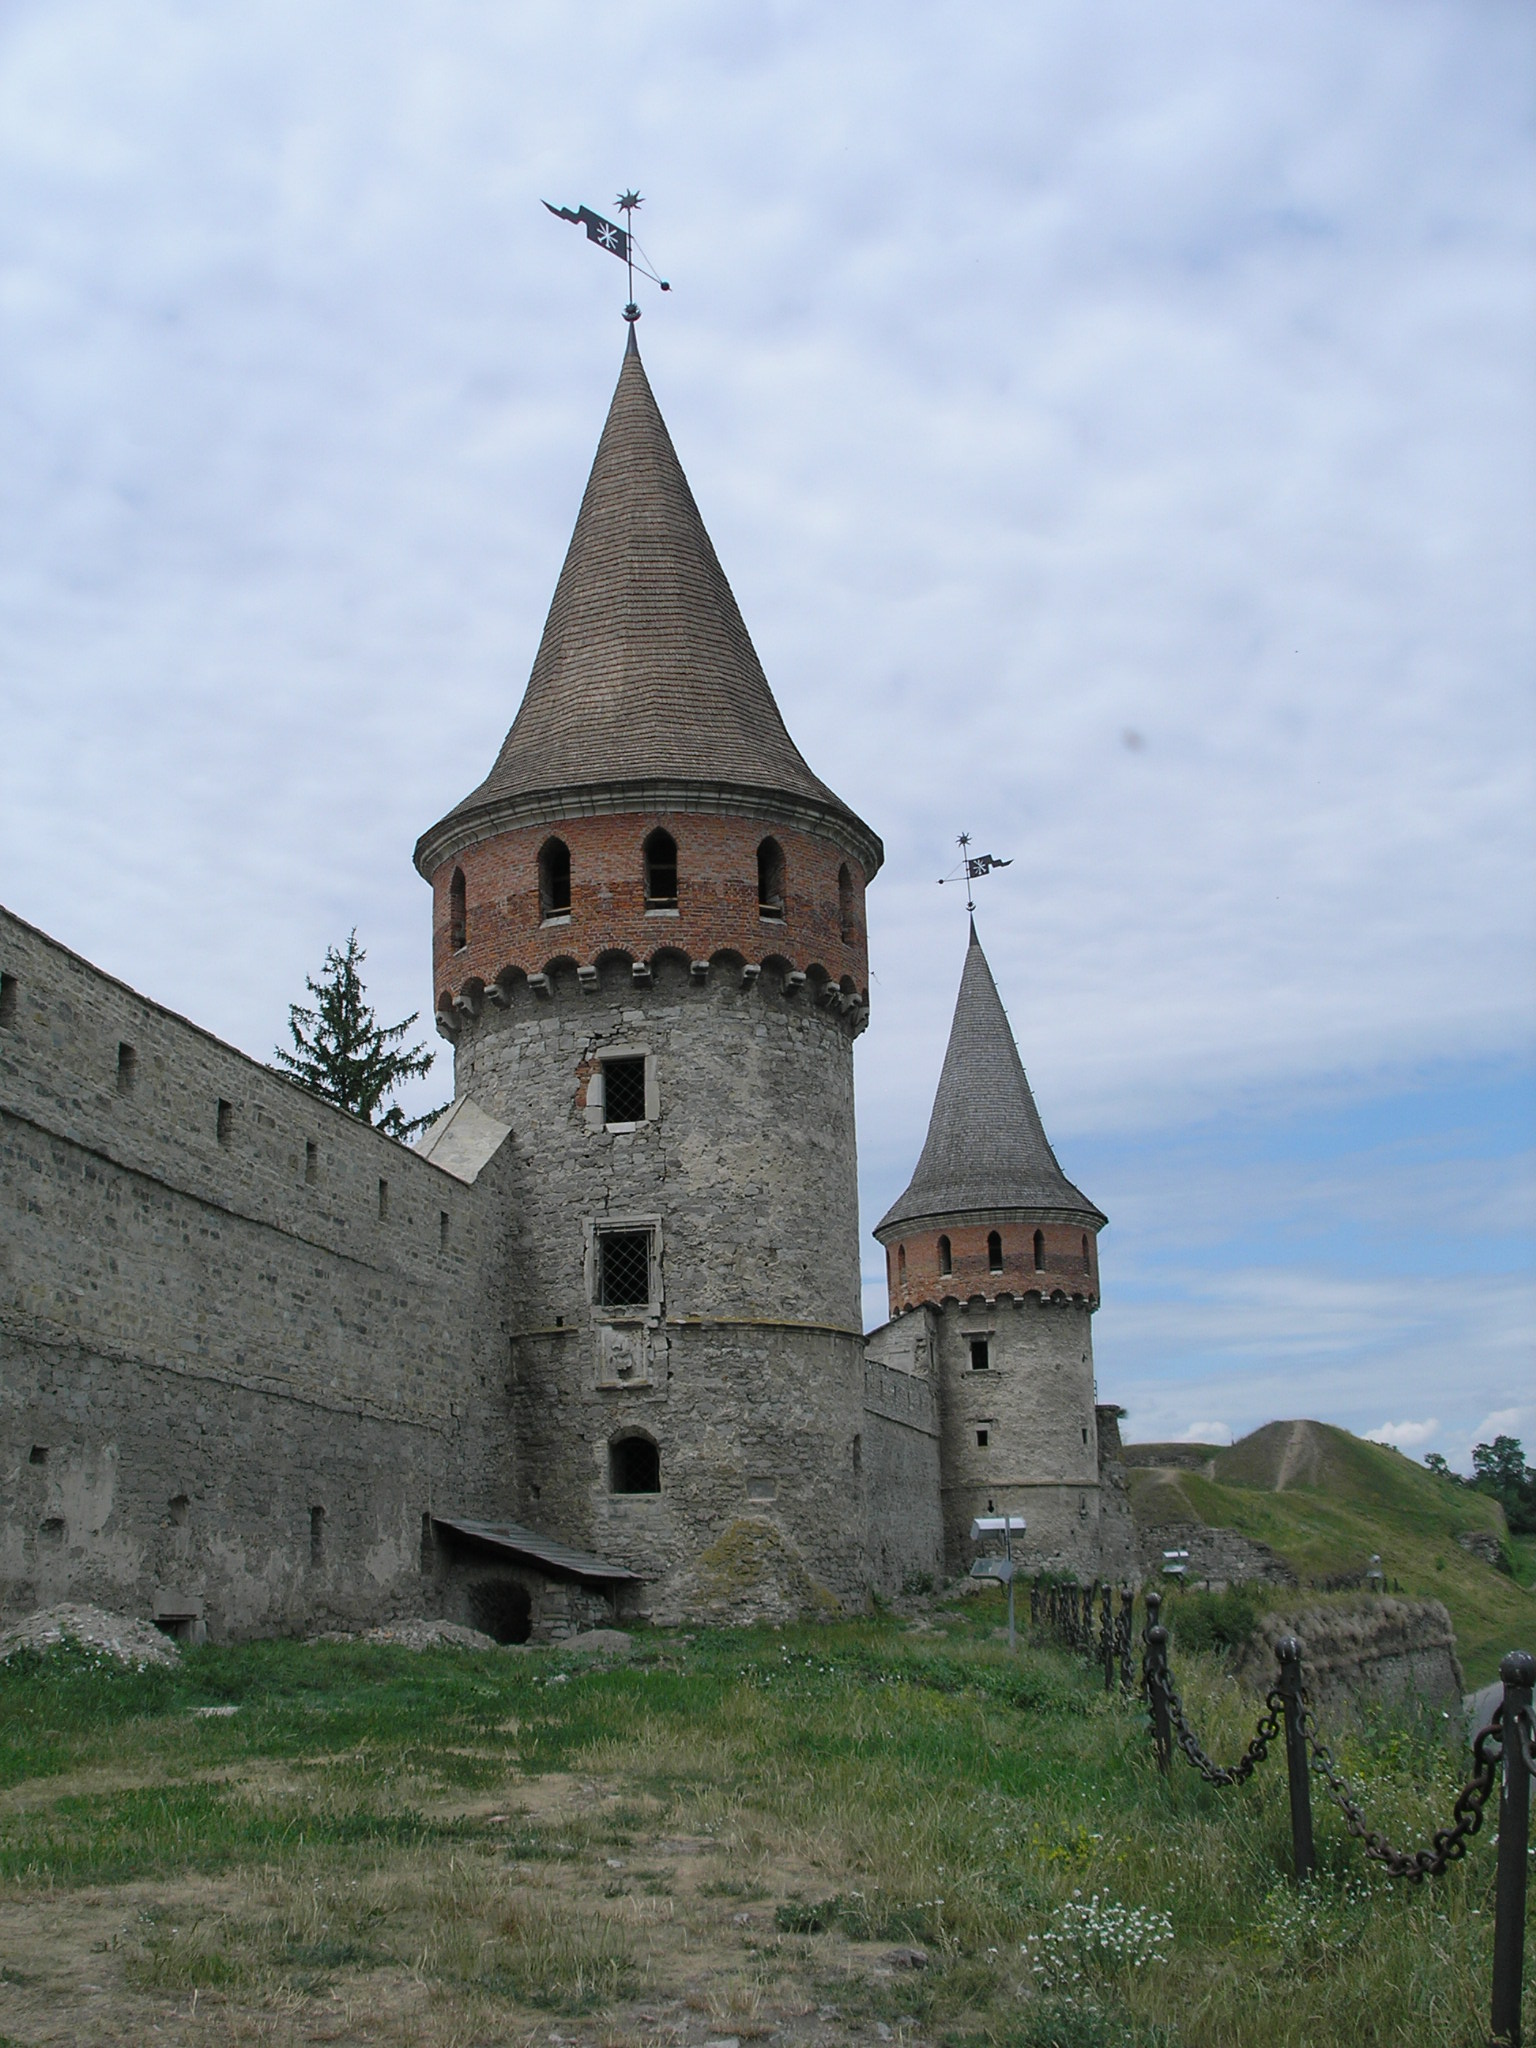 File:Kamianets-Podilskyi Castle towers.JPG - Wikimedia Commons